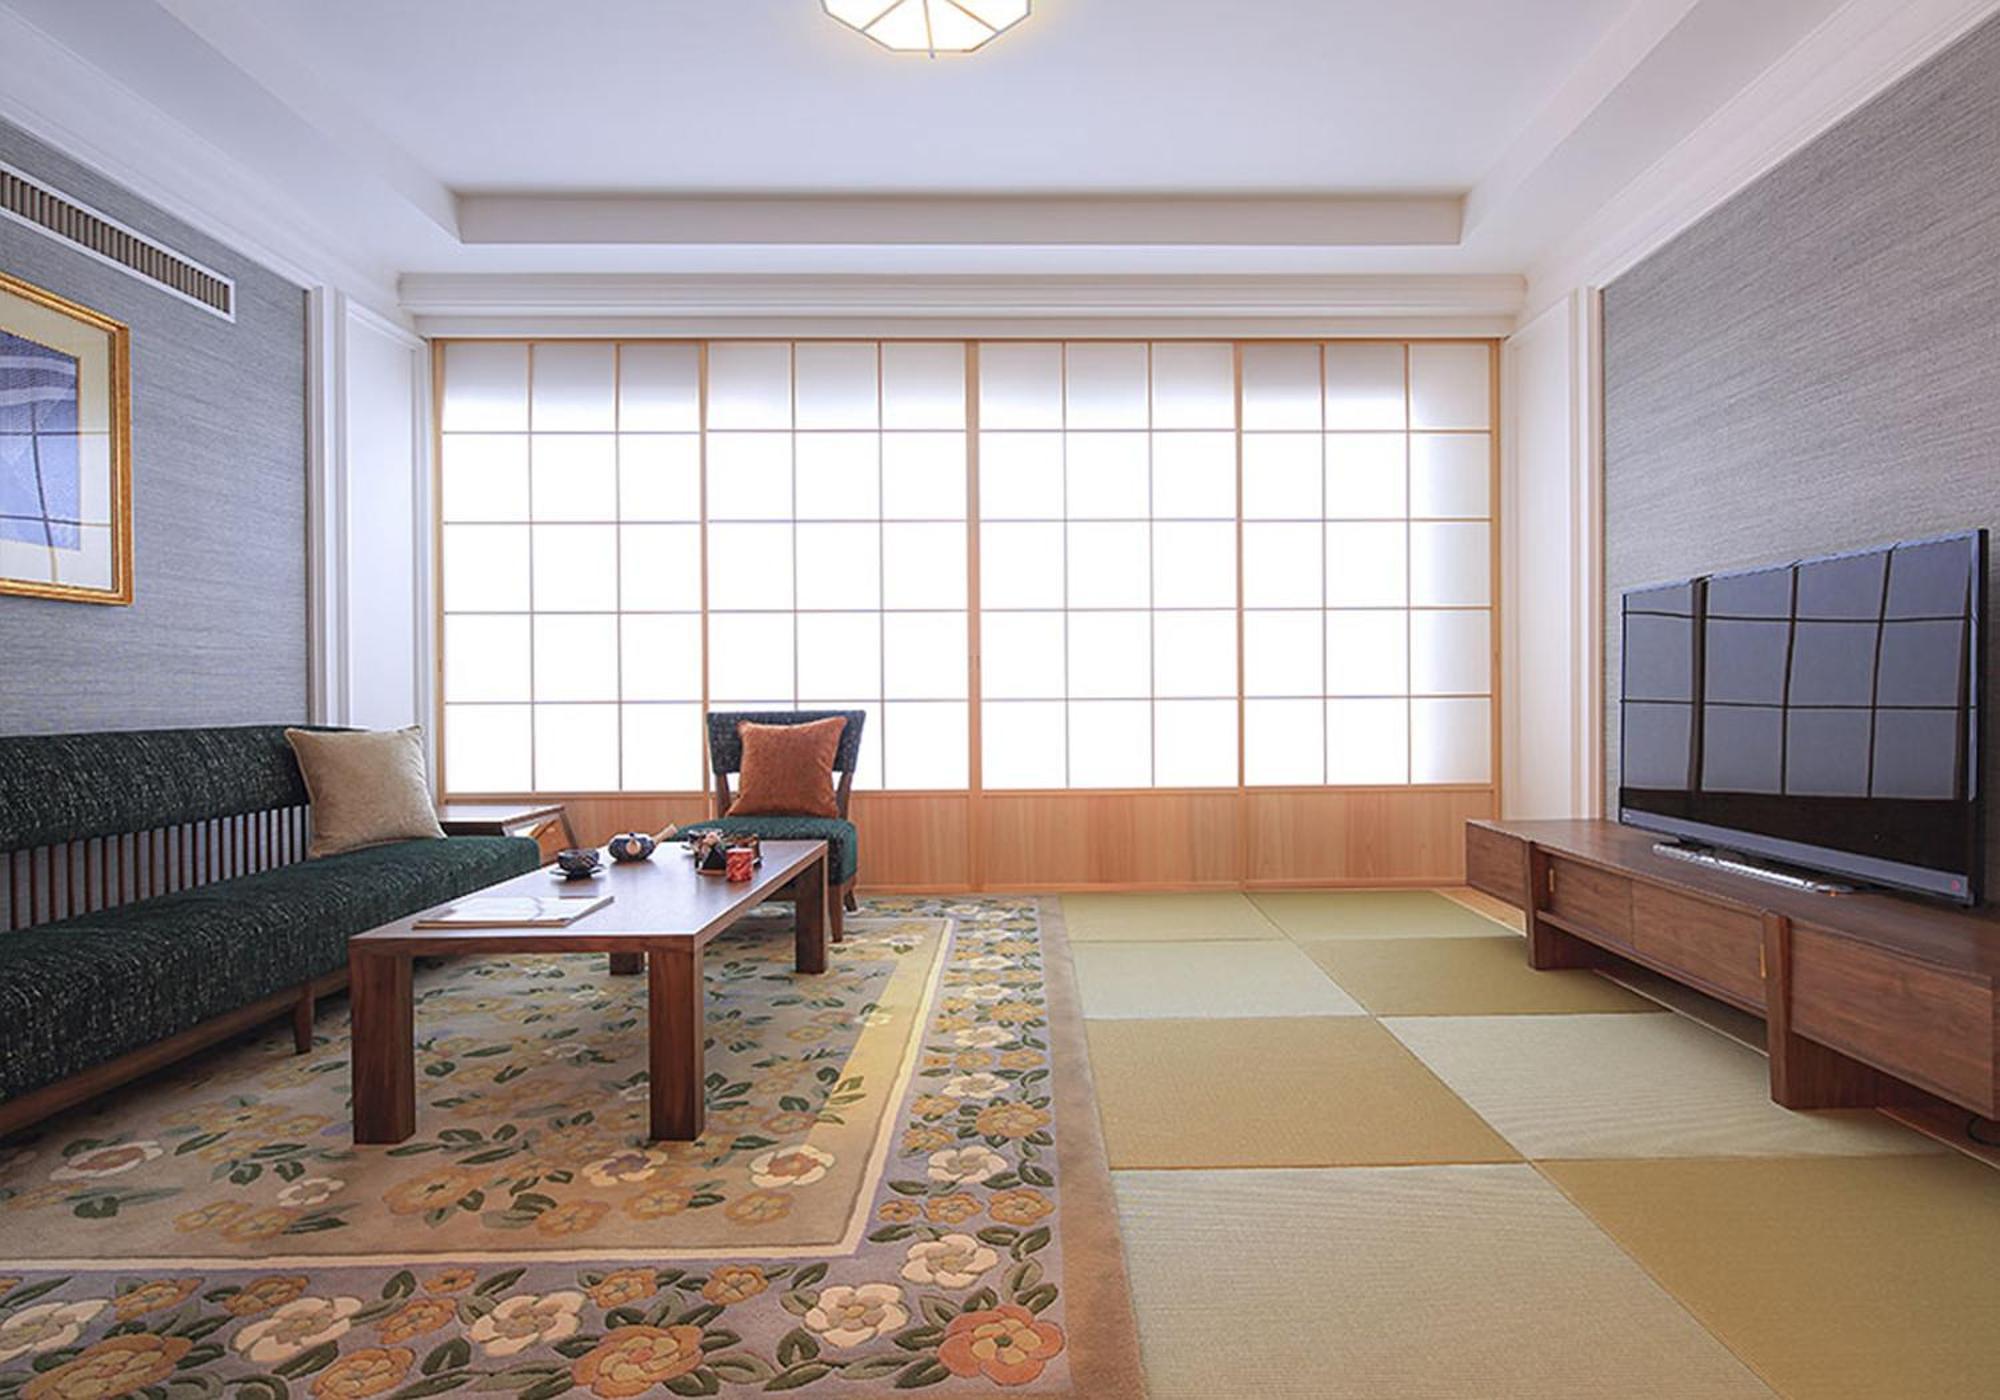 Hotel Chinzanso Präfektur Tokio Exterior foto